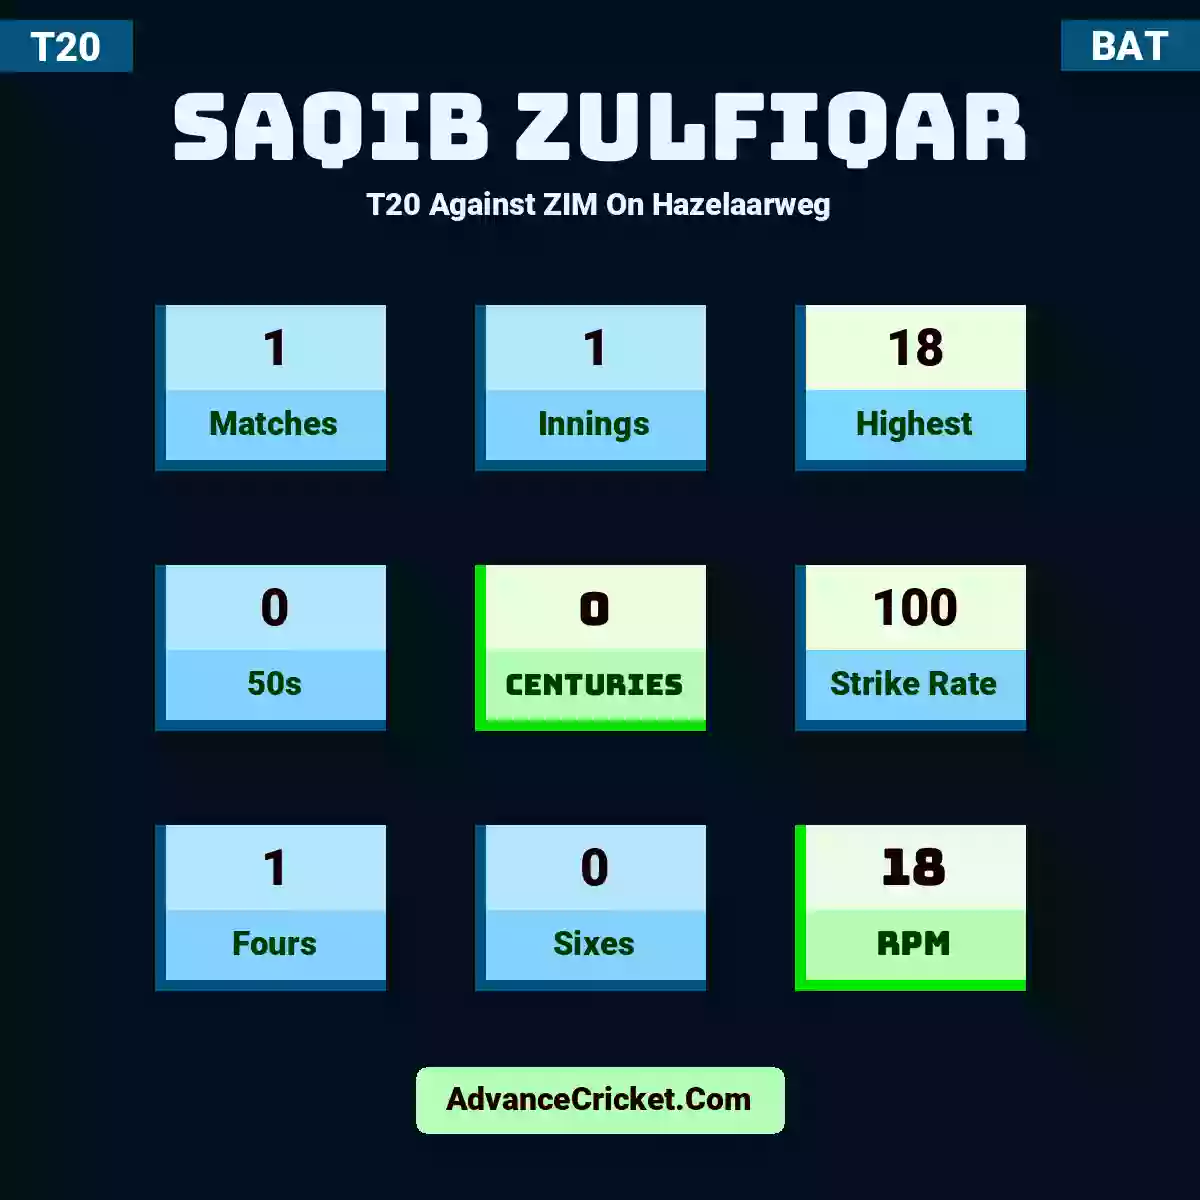 Saqib Zulfiqar T20  Against ZIM On Hazelaarweg, Saqib Zulfiqar played 1 matches, scored 18 runs as highest, 0 half-centuries, and 0 centuries, with a strike rate of 100. S.Zulfiqar hit 1 fours and 0 sixes, with an RPM of 18.